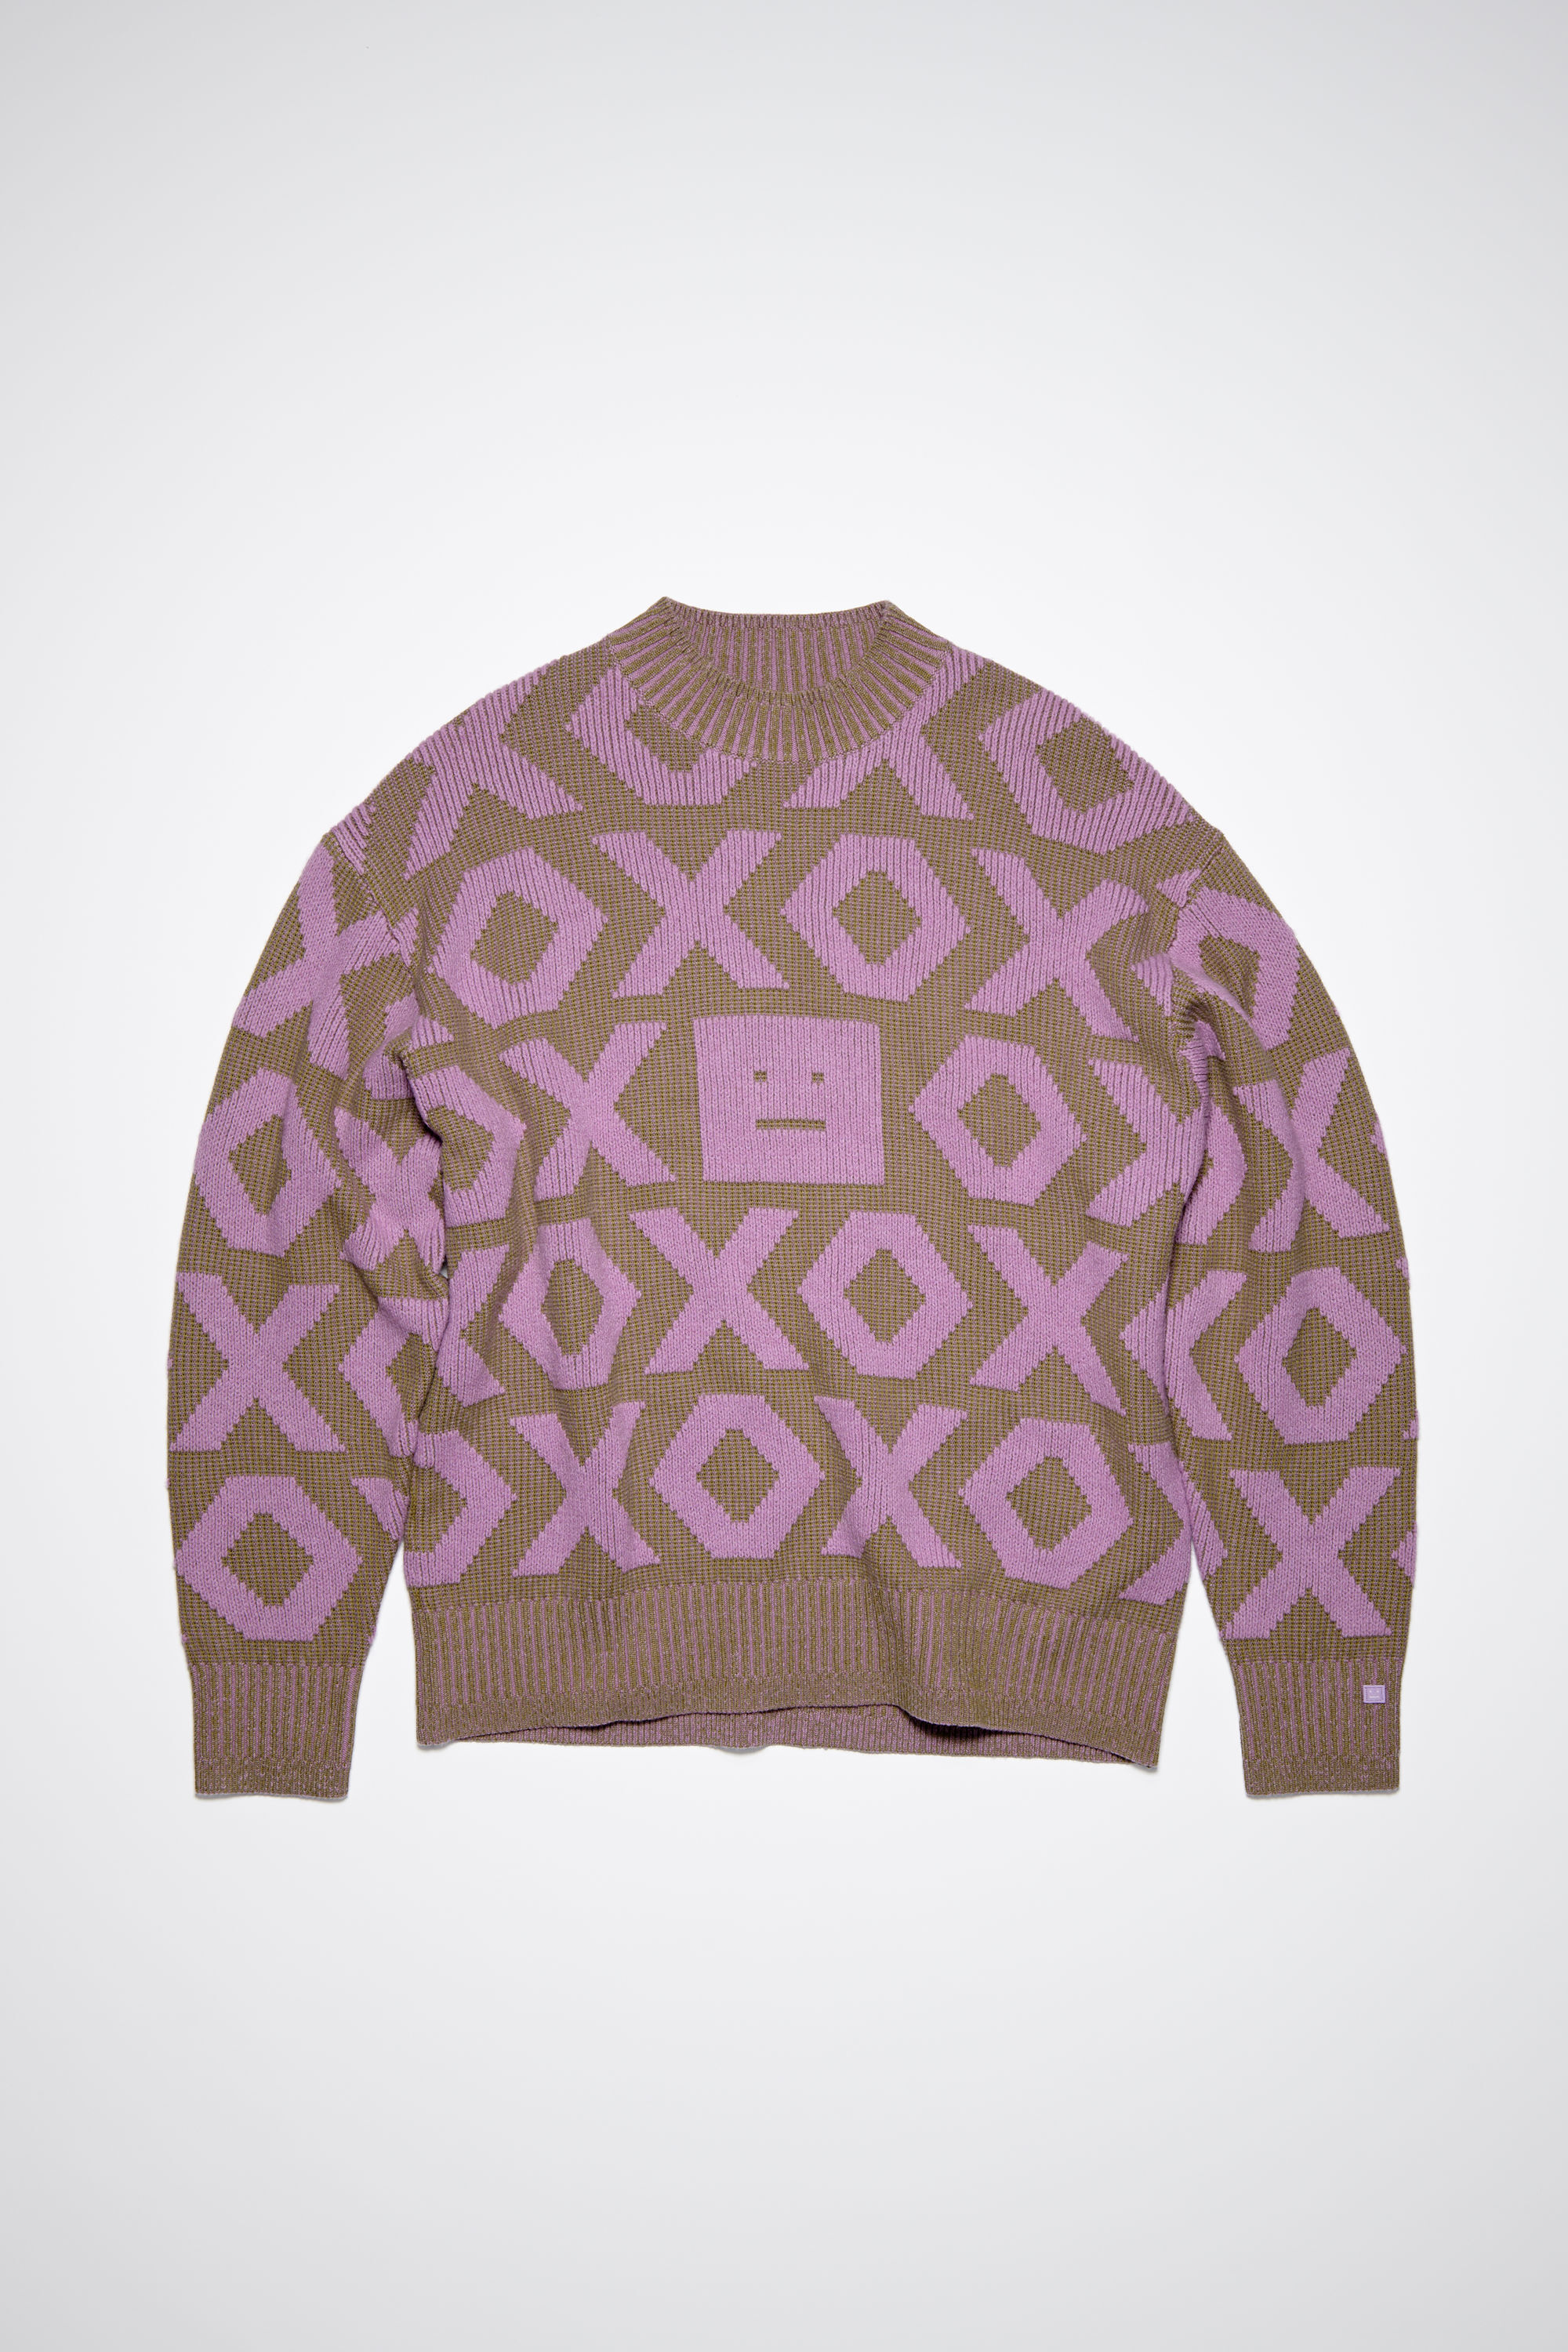 Acne Studios - Face logo jumper - Khaki beige/smoky purple